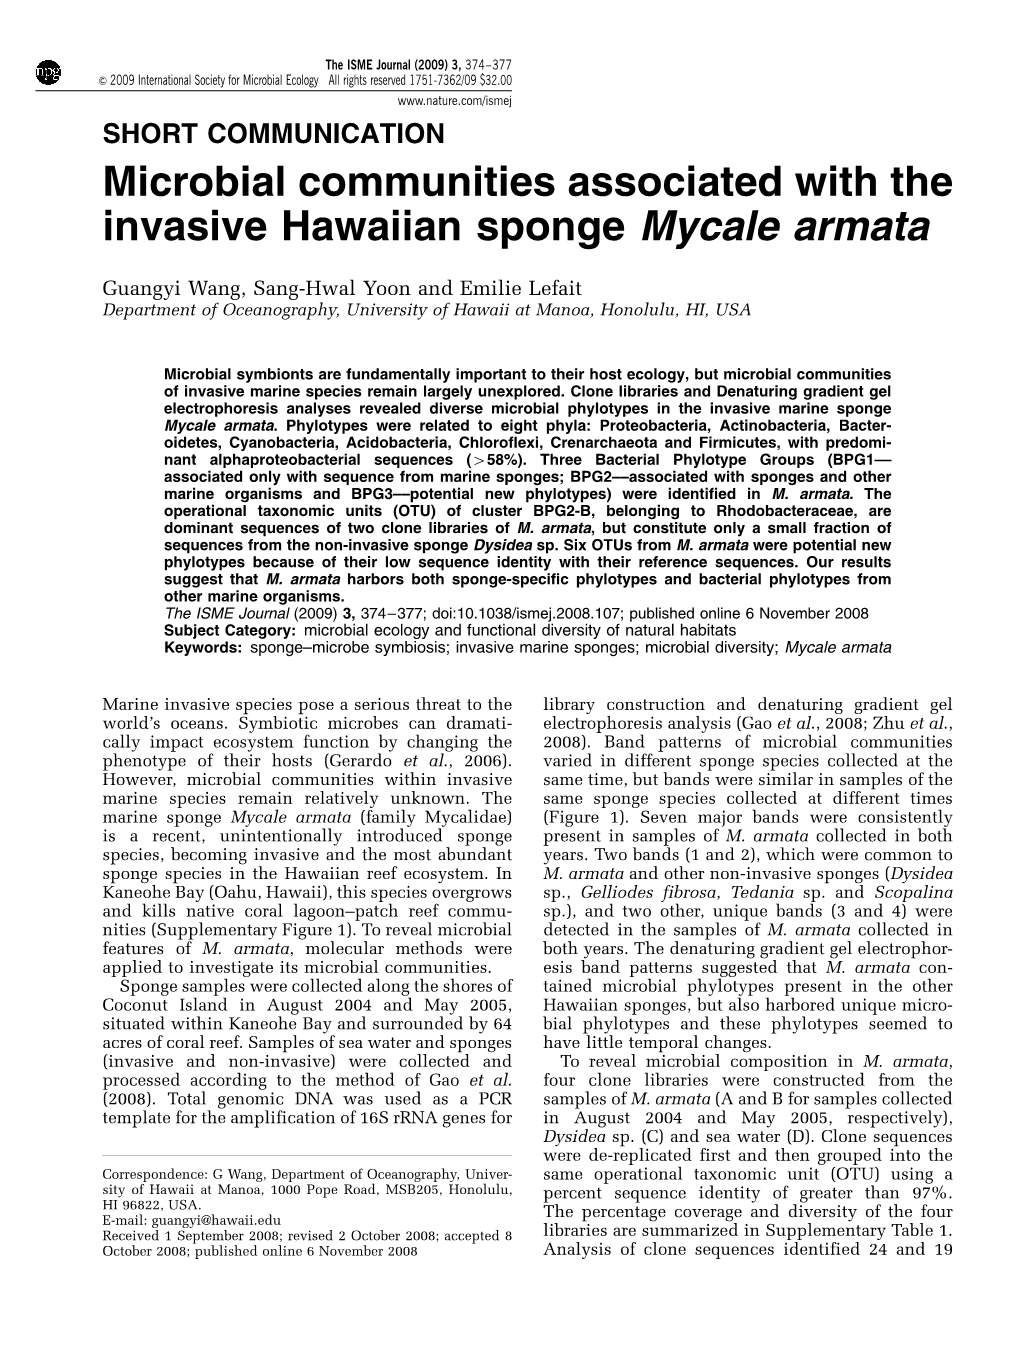 Microbial Communities Associated with the Invasive Hawaiian Sponge Mycale Armata